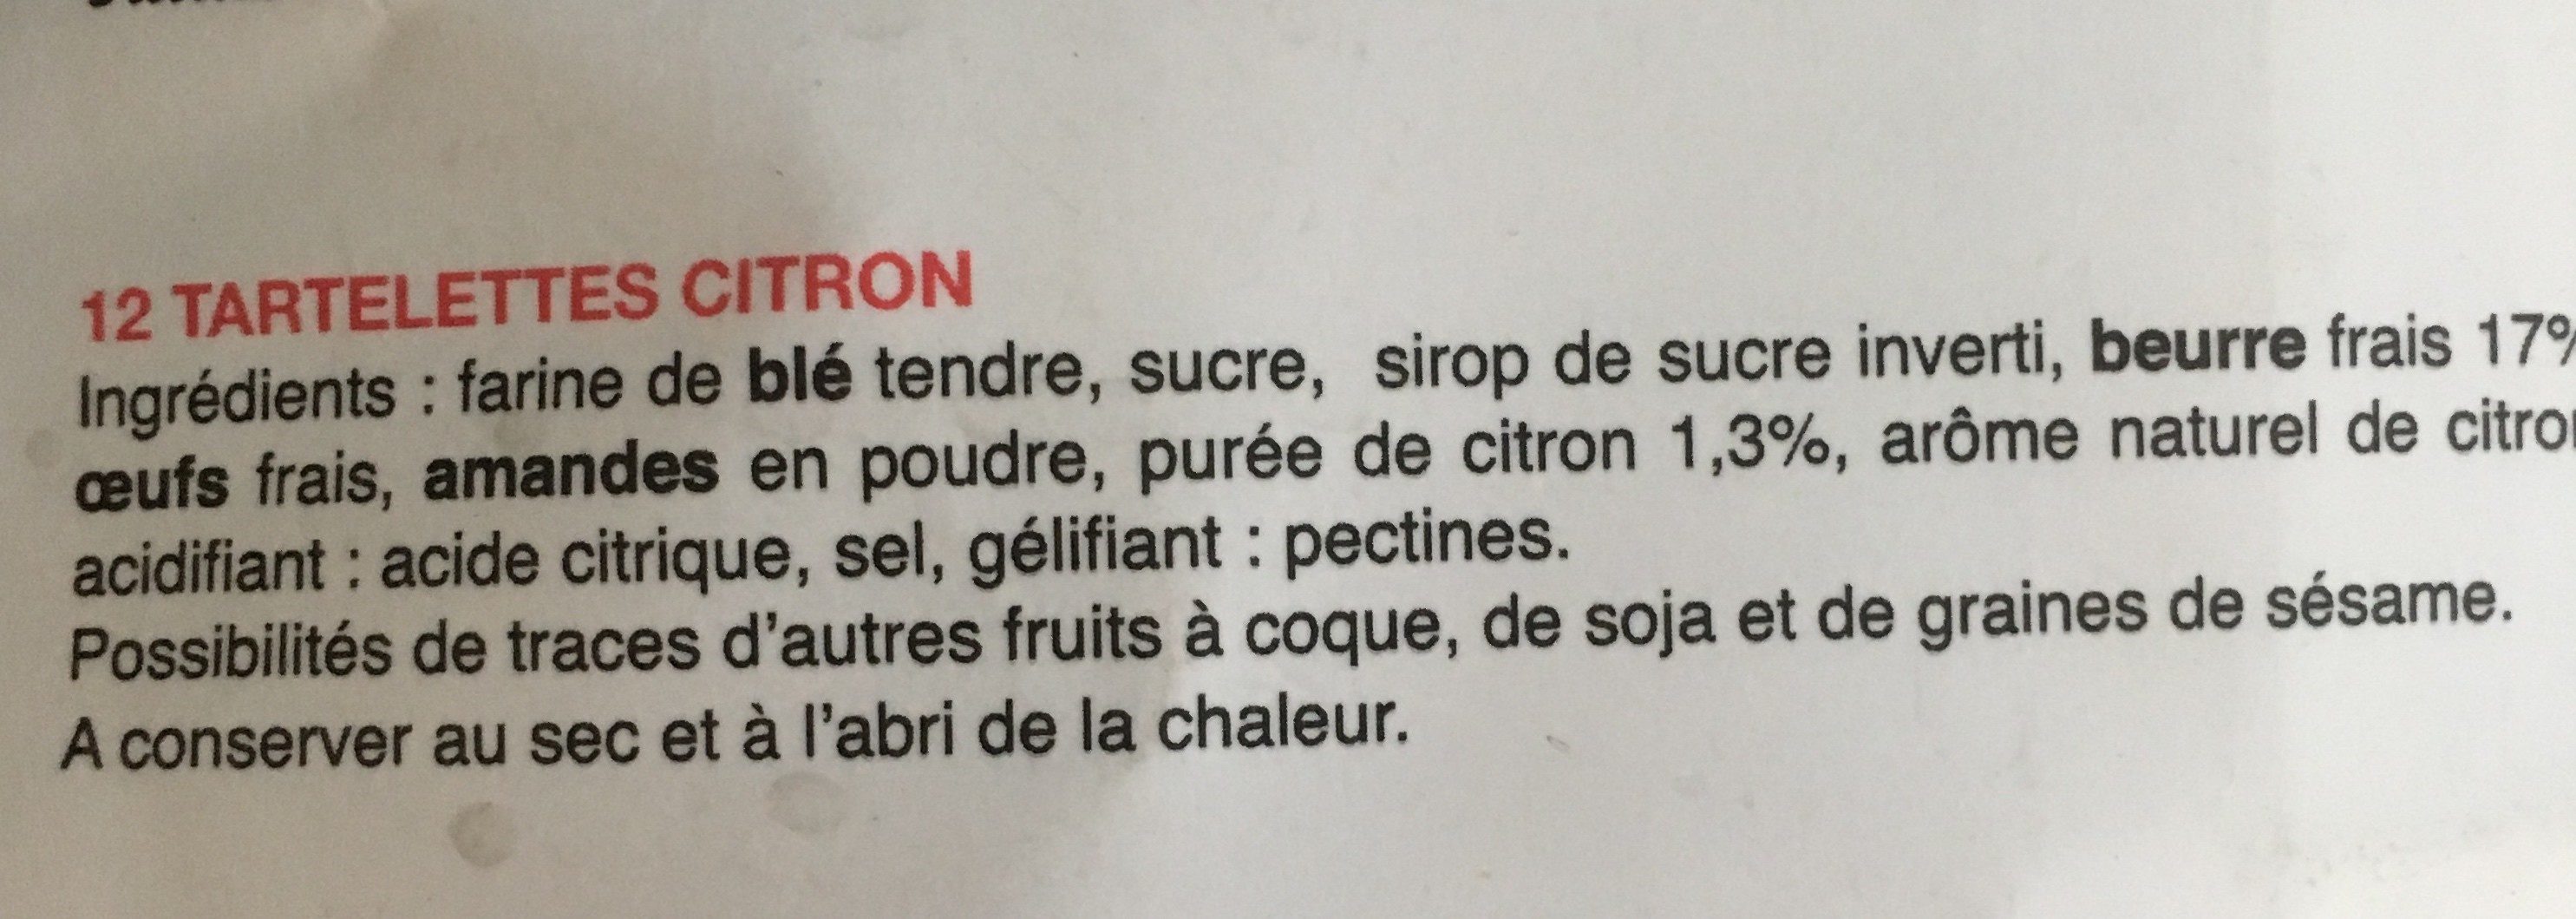 Tartelettes citron - Ingredients - fr